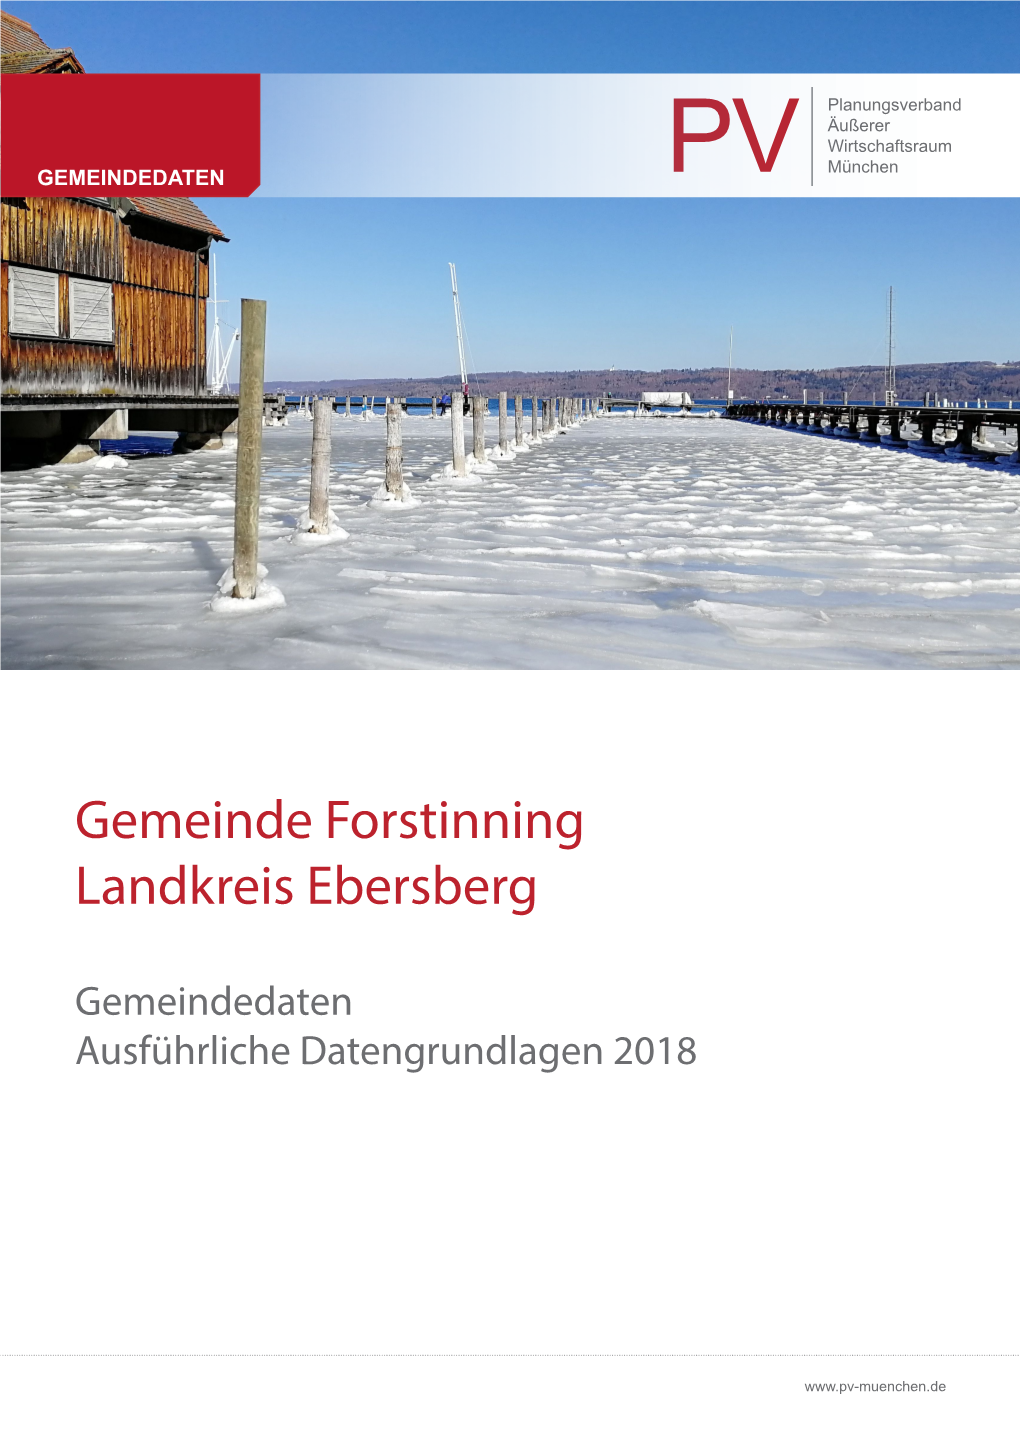 Gemeinde Forstinning Landkreis Ebersberg